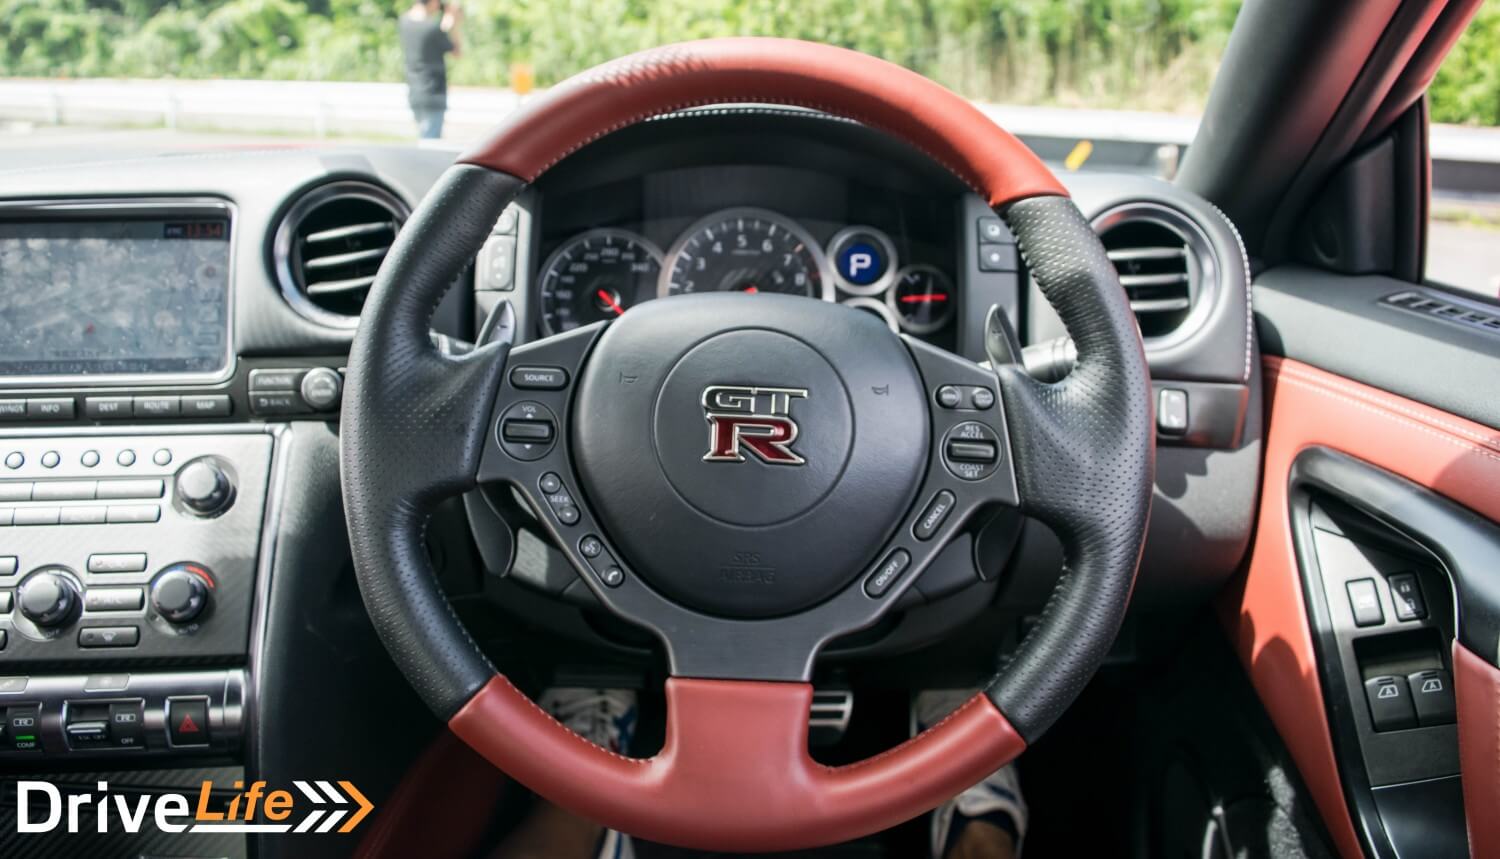 drive-life-nz-car-review-nissan-gtr-interior-02